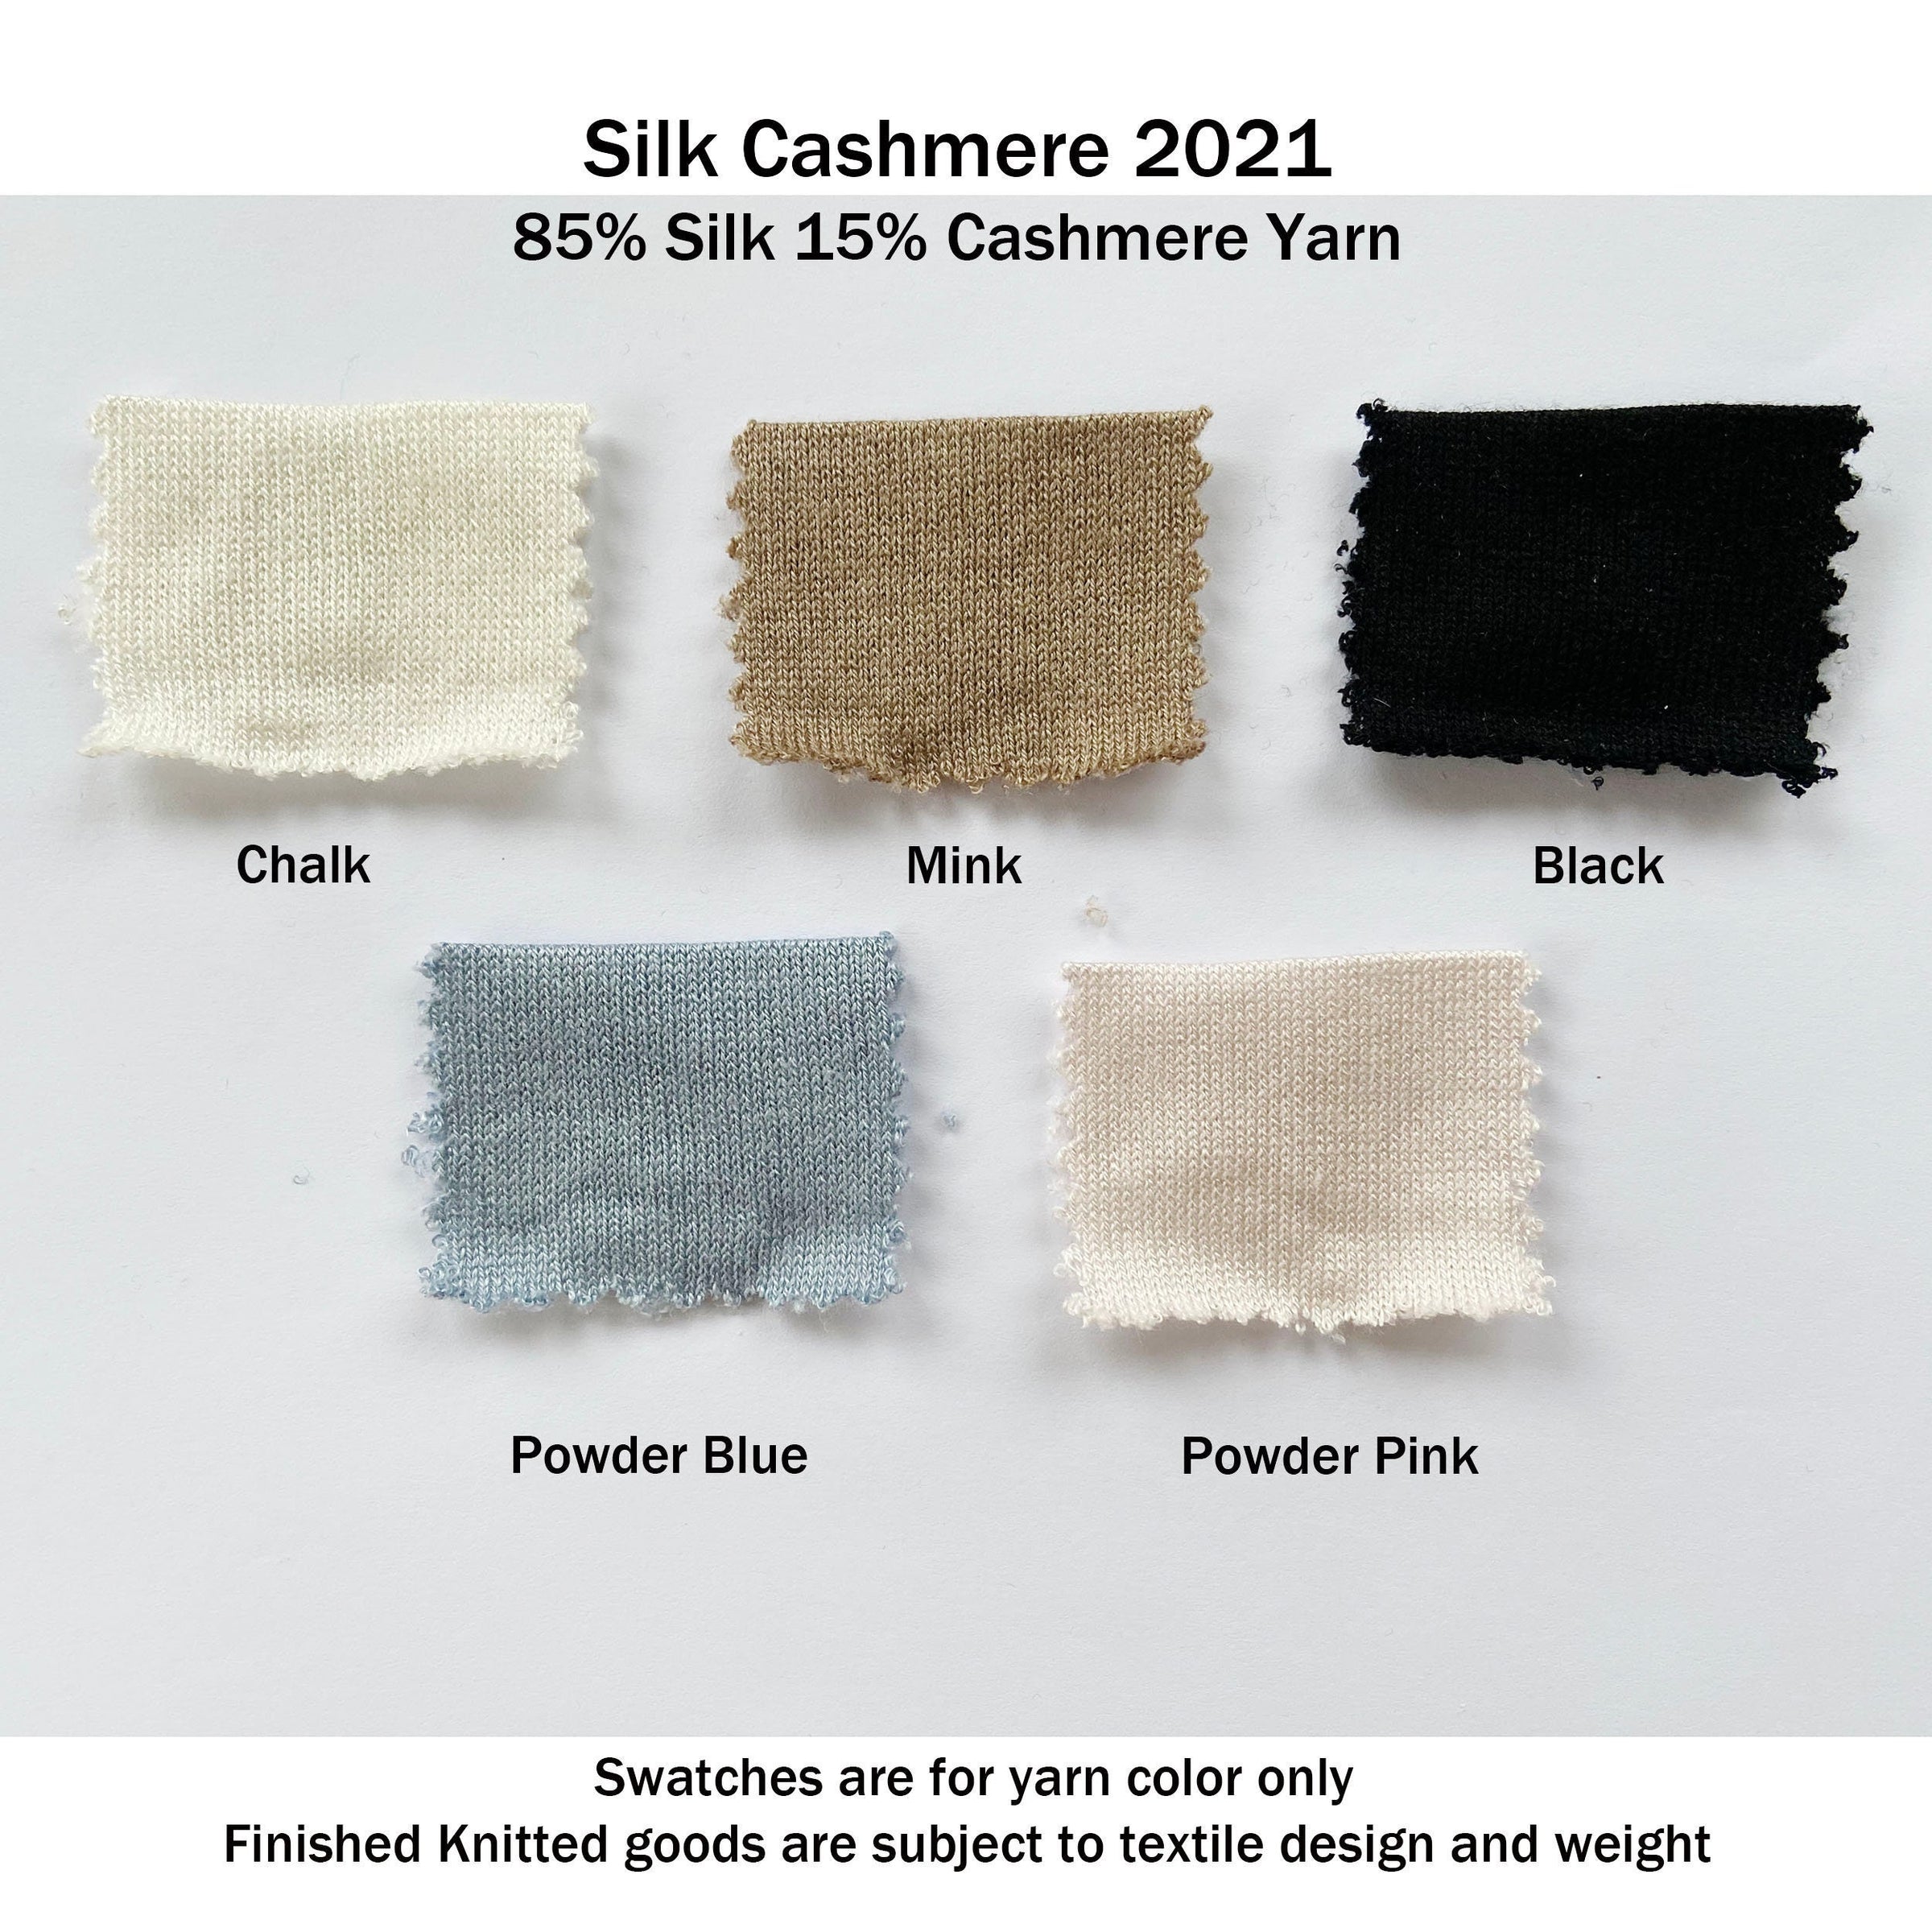 Silk Cashmere Sweater, Sheer Turtleneck – Sandmaiden Sleepwear